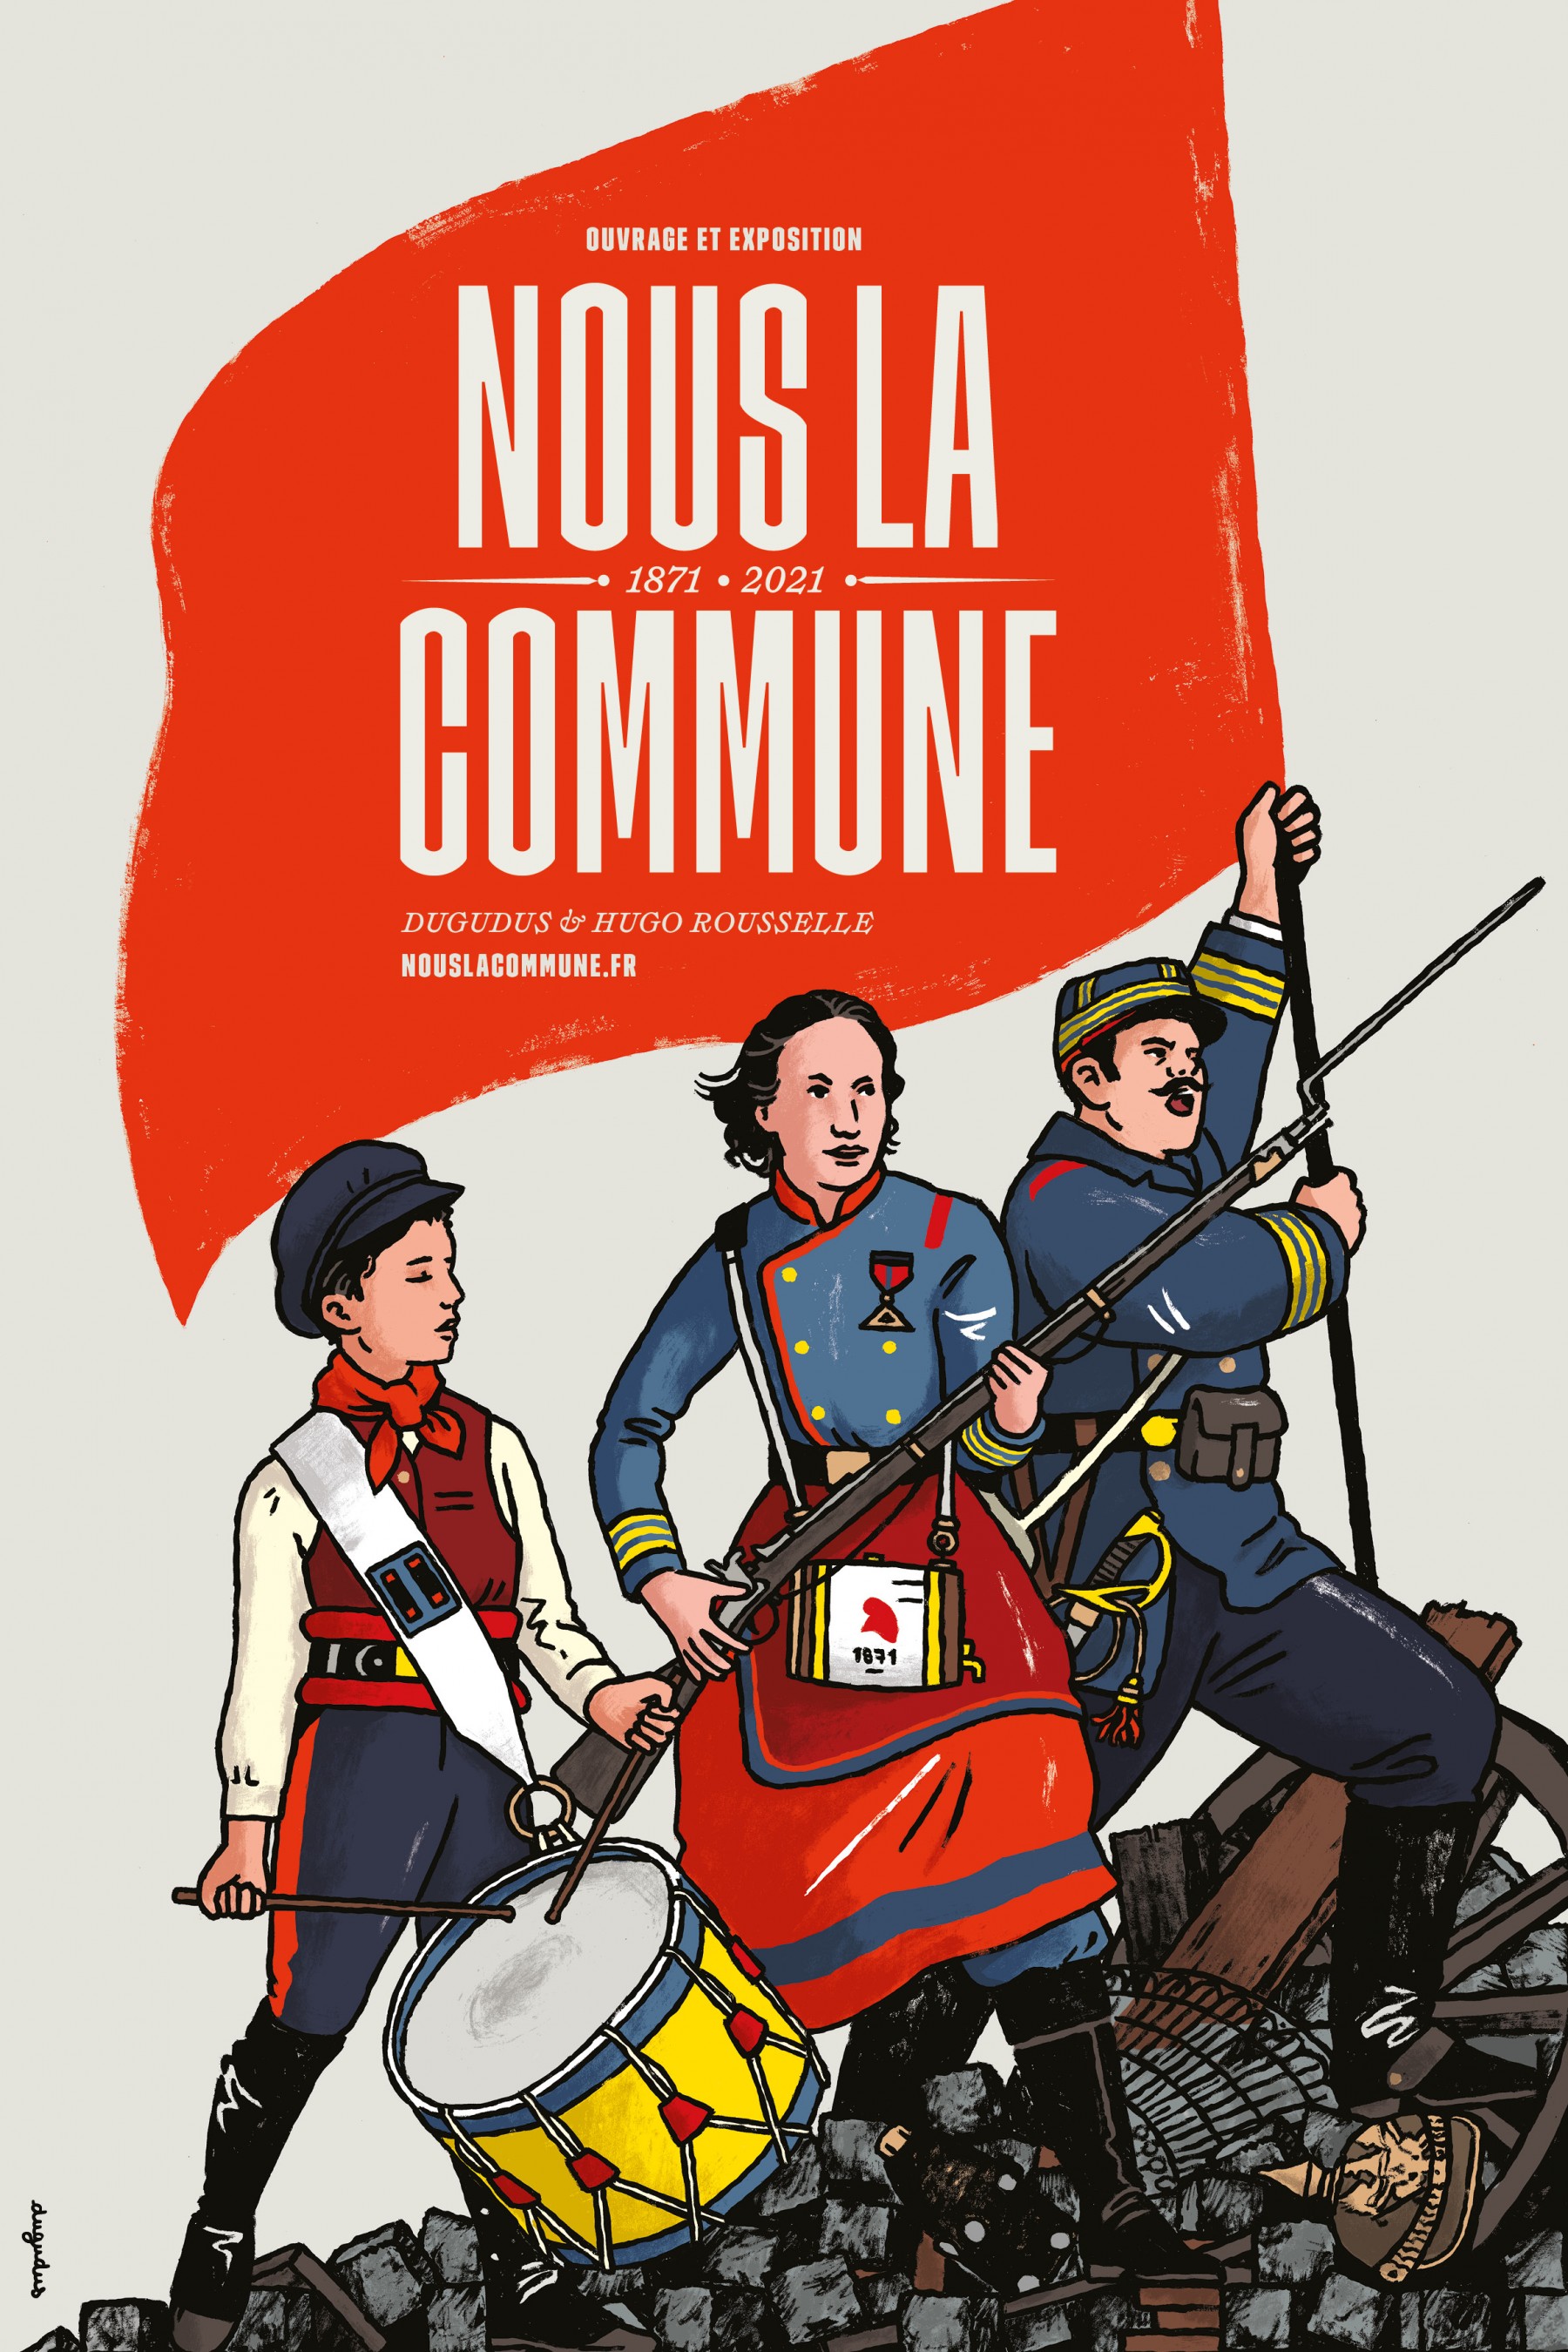 Commune illustration